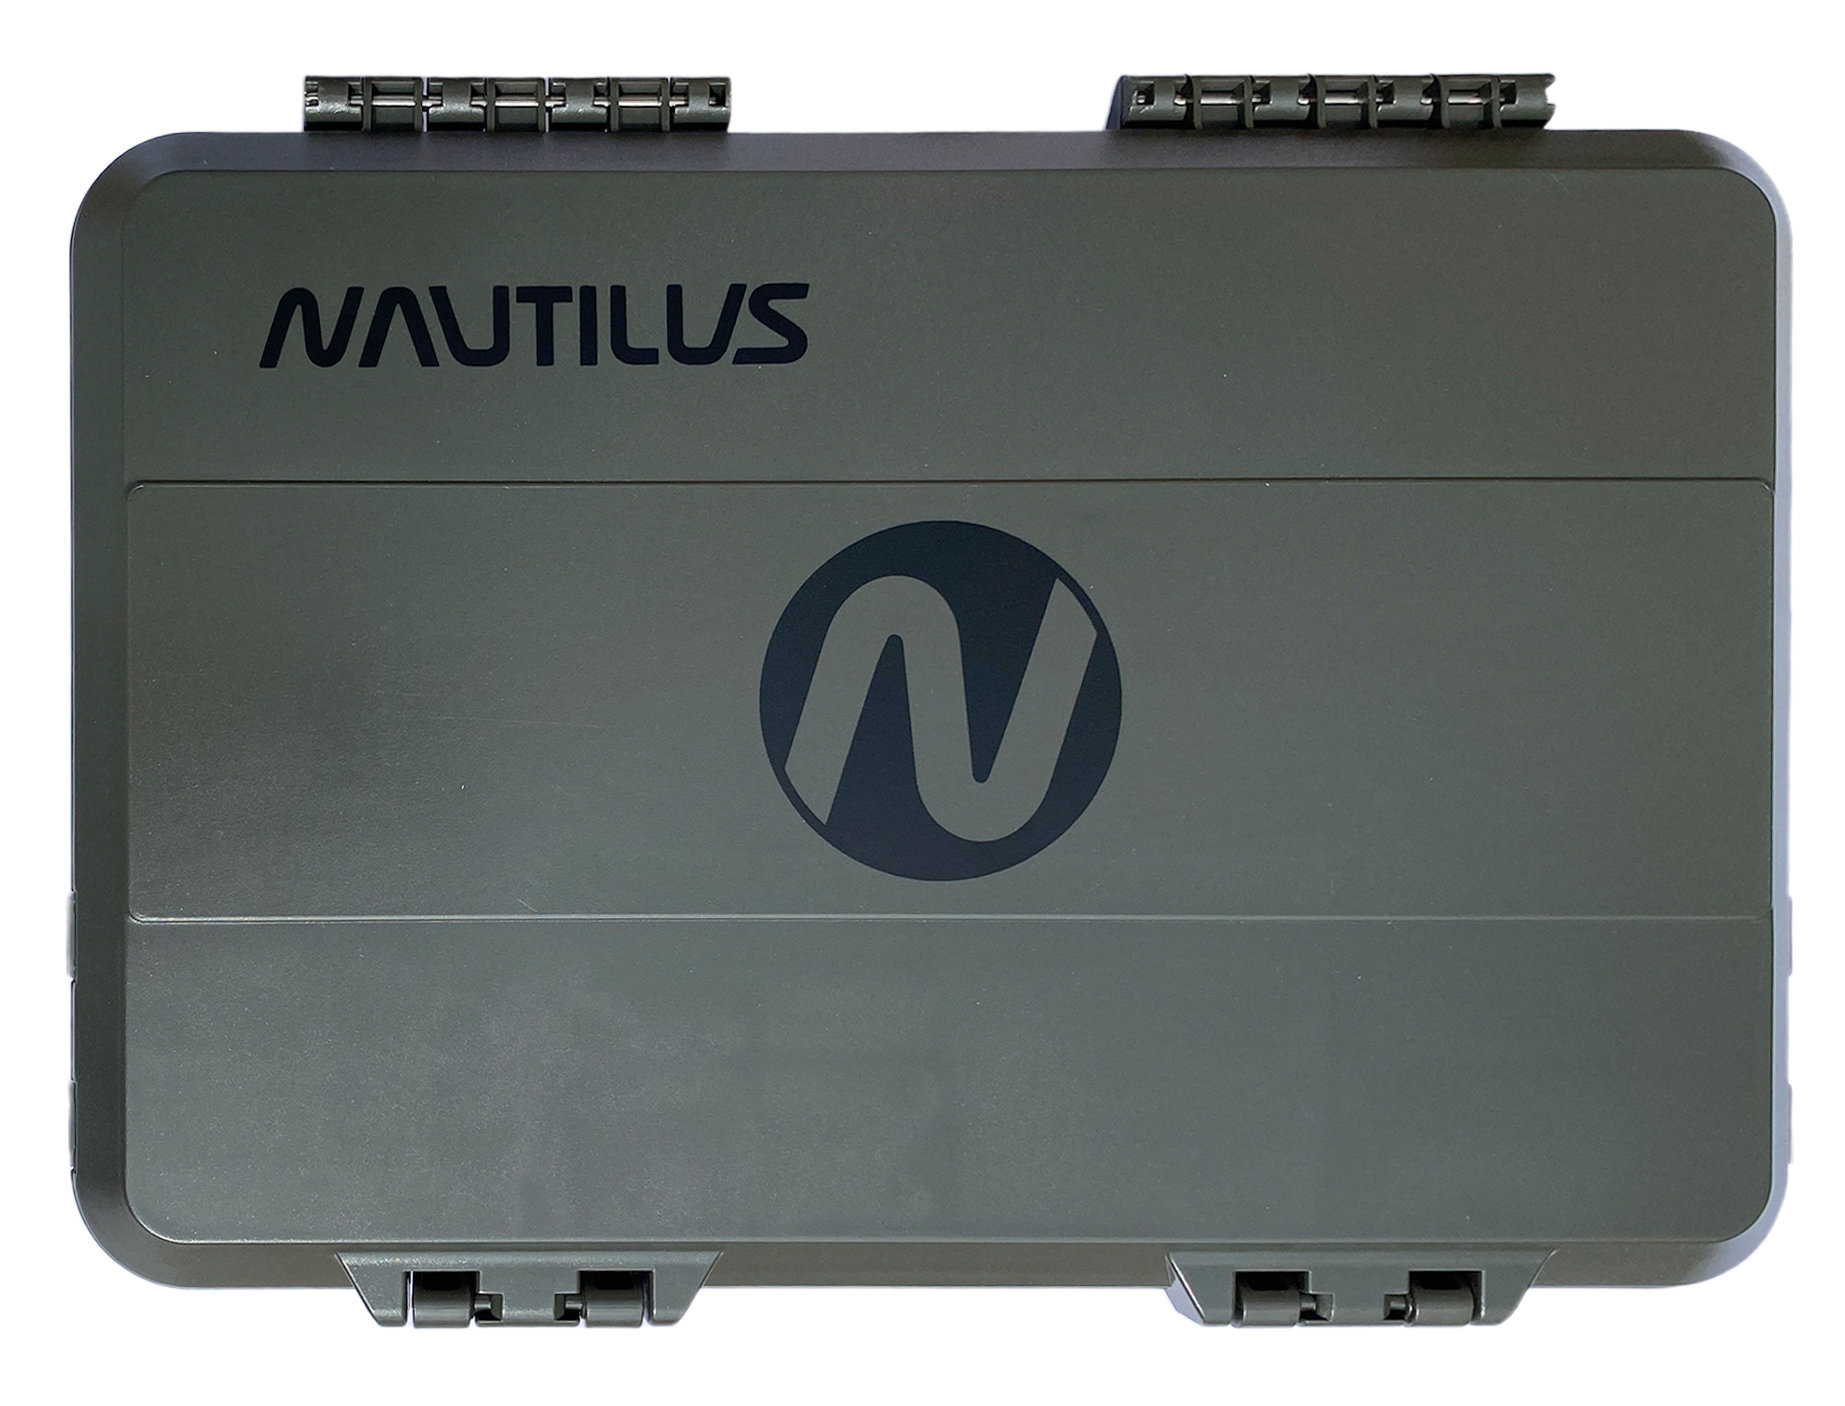 Коробка Nautilus Carpfishing box CS-M1 29*21*7,5см - фото 1